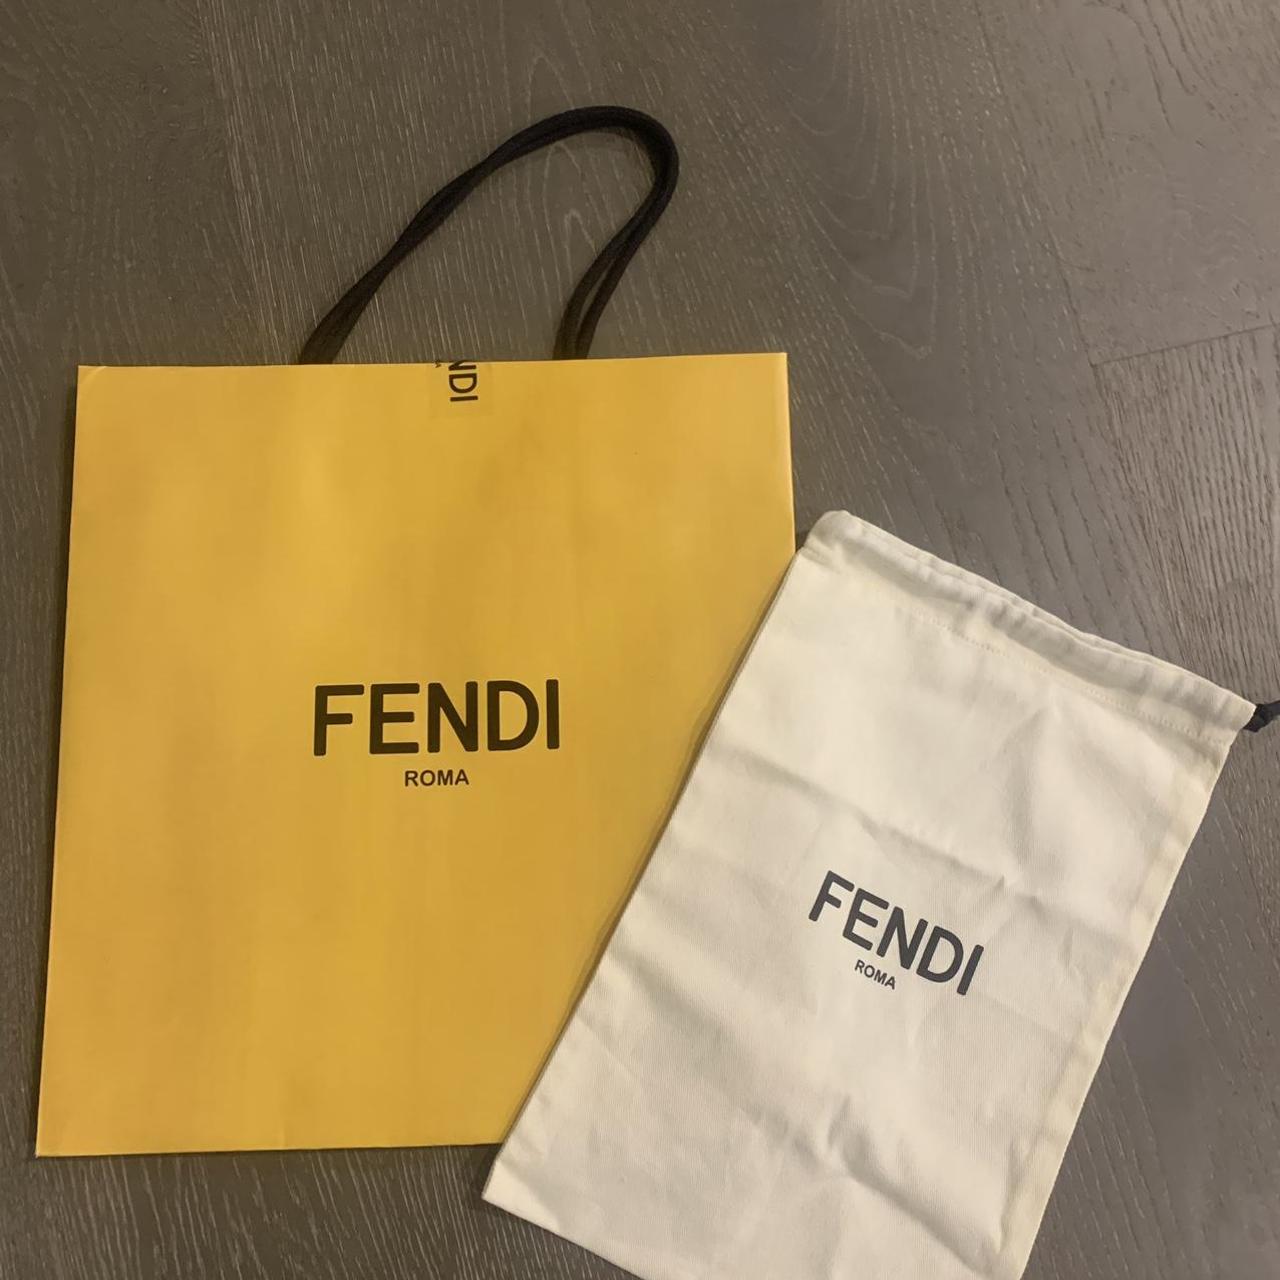 Fendi carry bag and dust bag - Depop